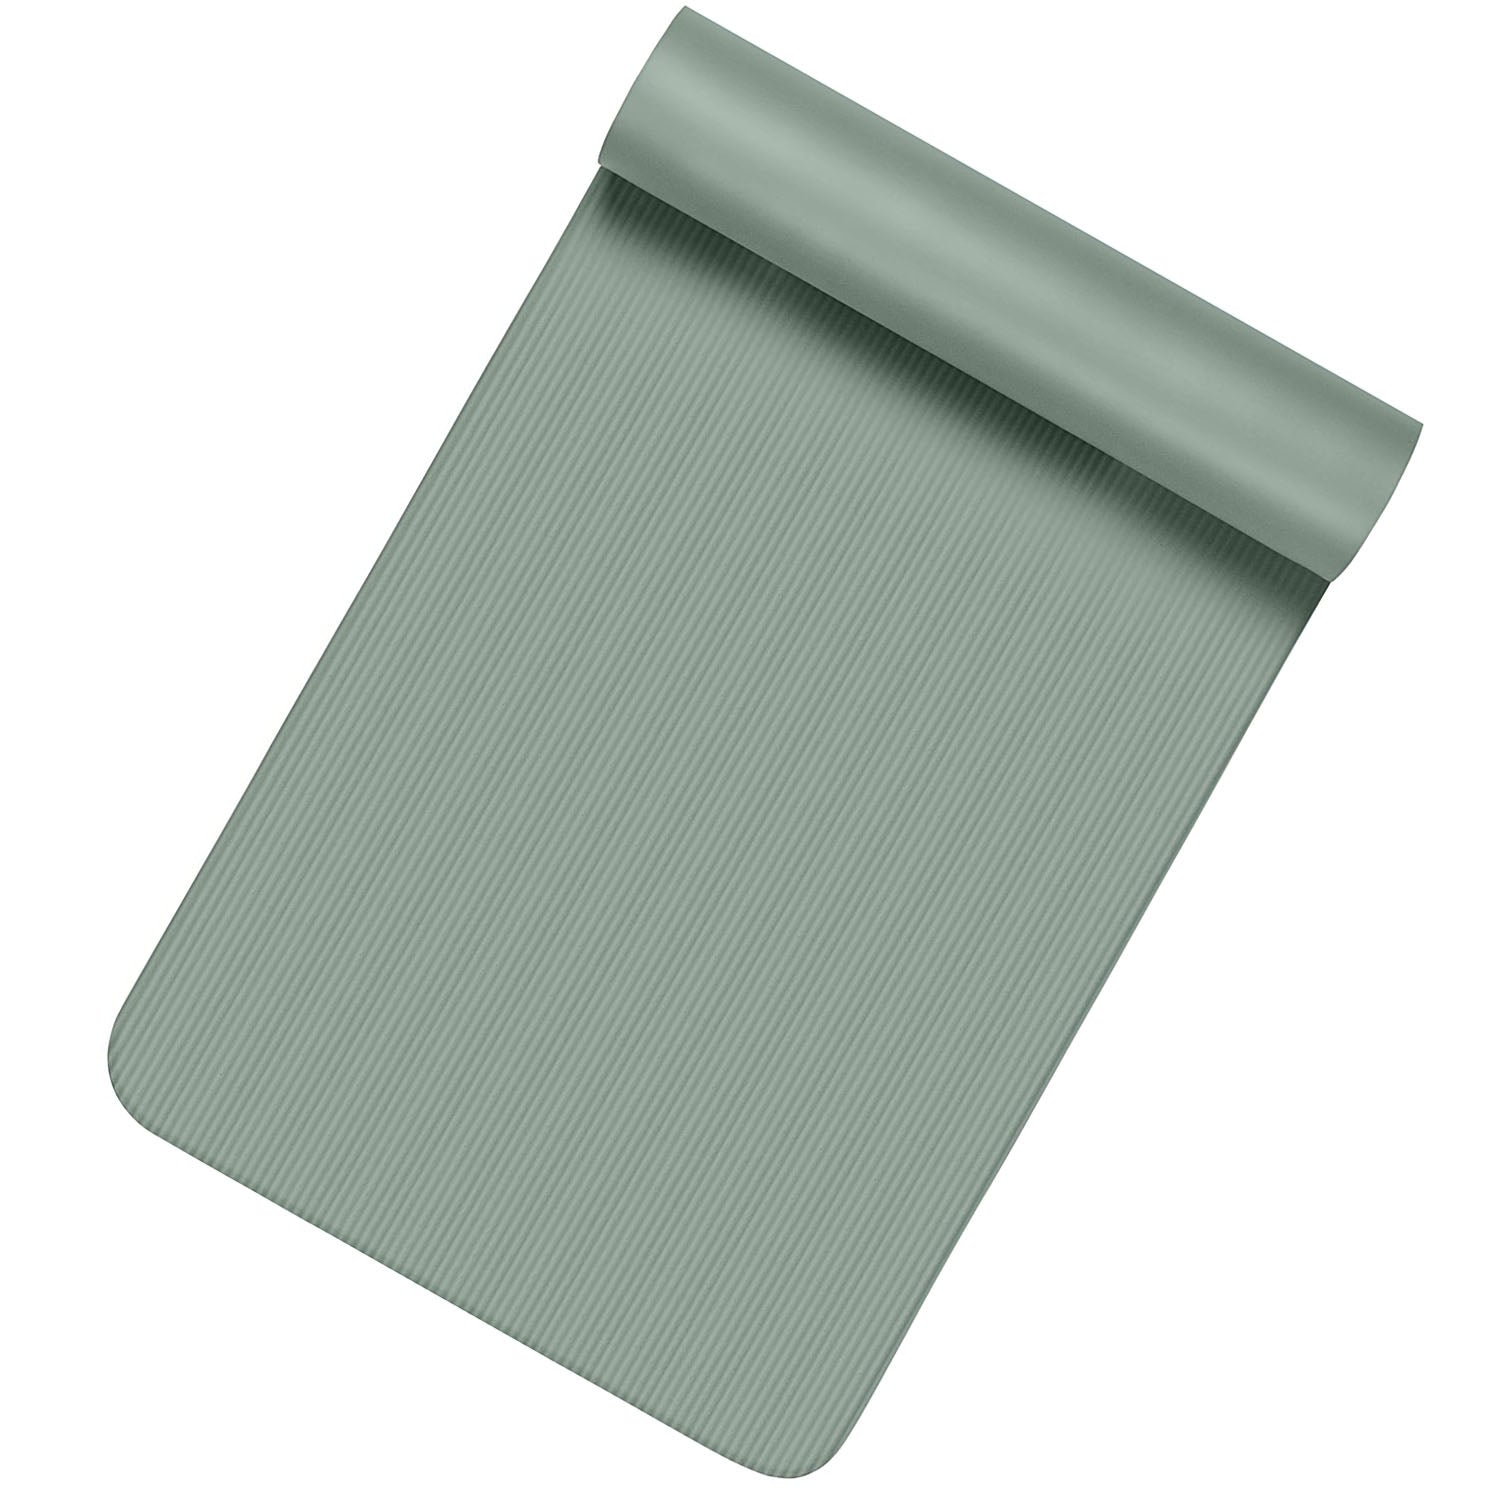 NBR 10mm 15mm Thick Yoga Mat Anti-slip Blanket Home Gym Sport Esterill -  The Maashpit